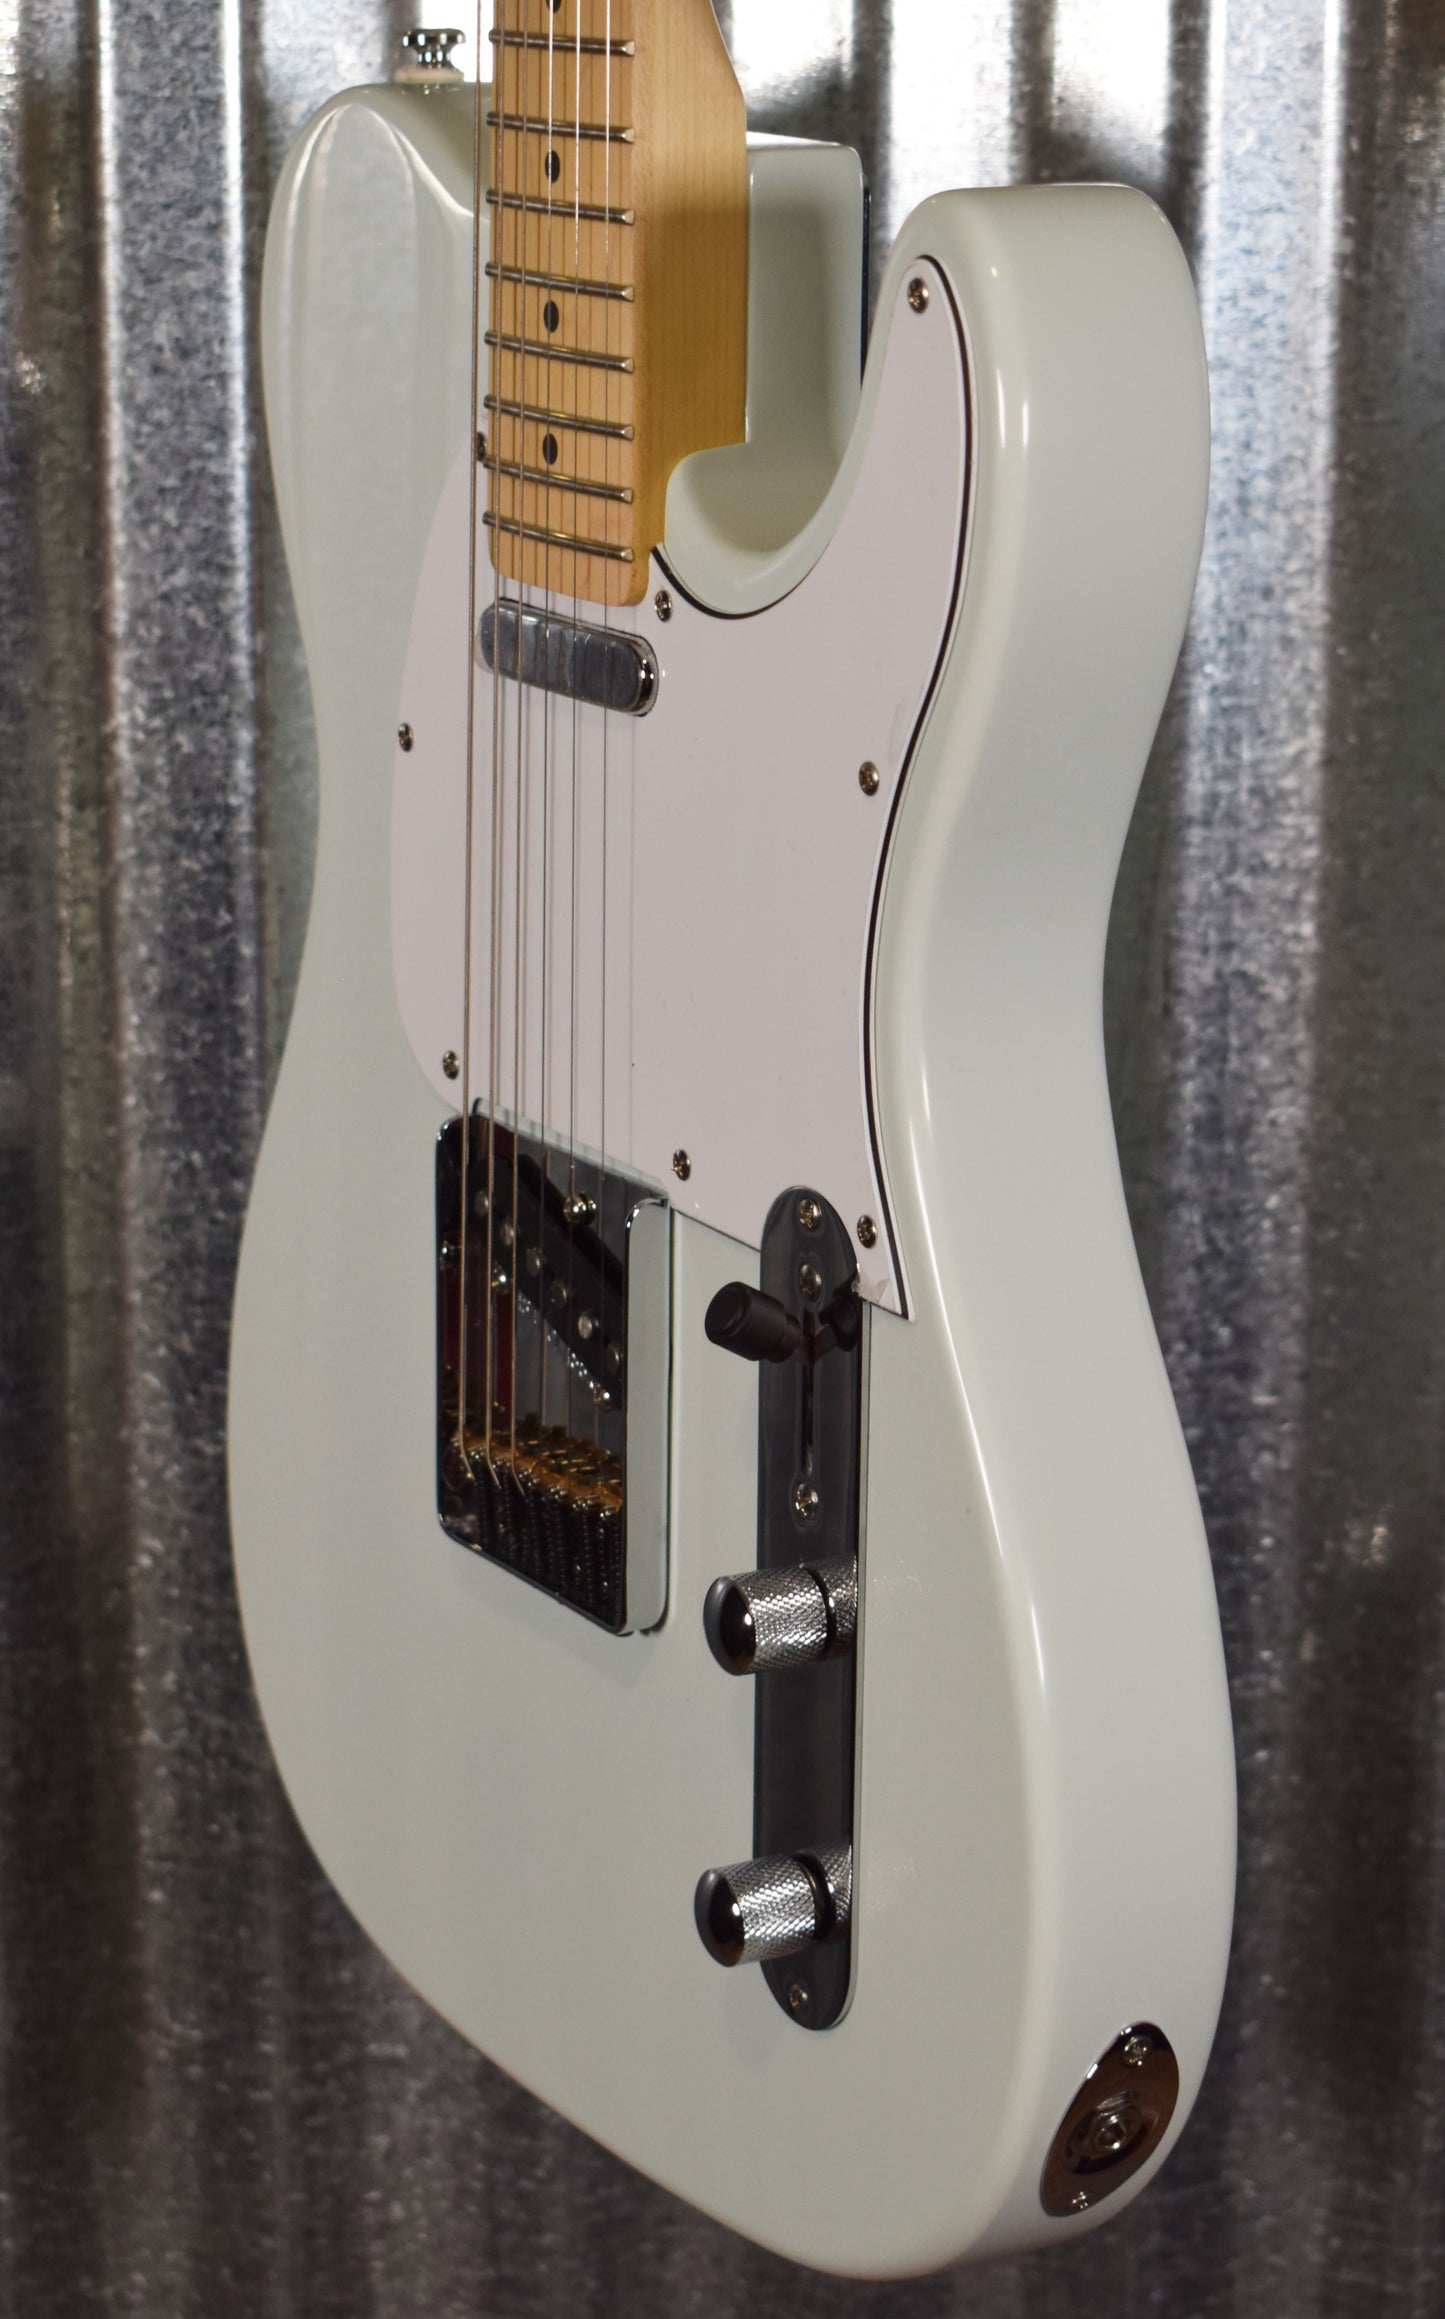 G&L Tribute ASAT Classic Sonic Blue Guitar #6326 Used